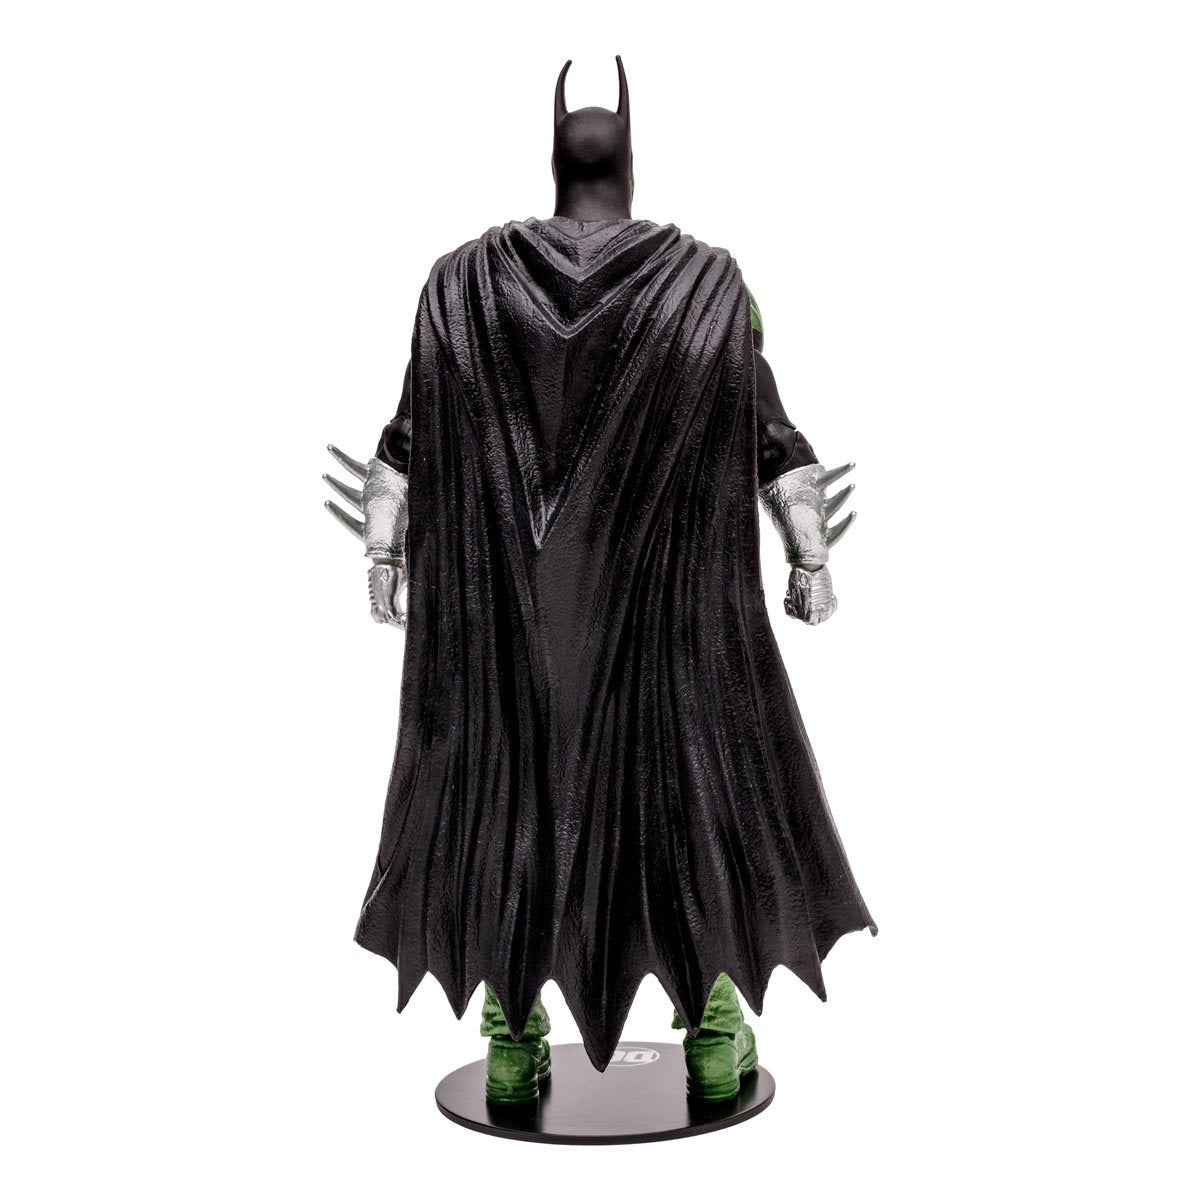 DC McFarlane Collector Edition Wave 3 Batman as Green Lantern